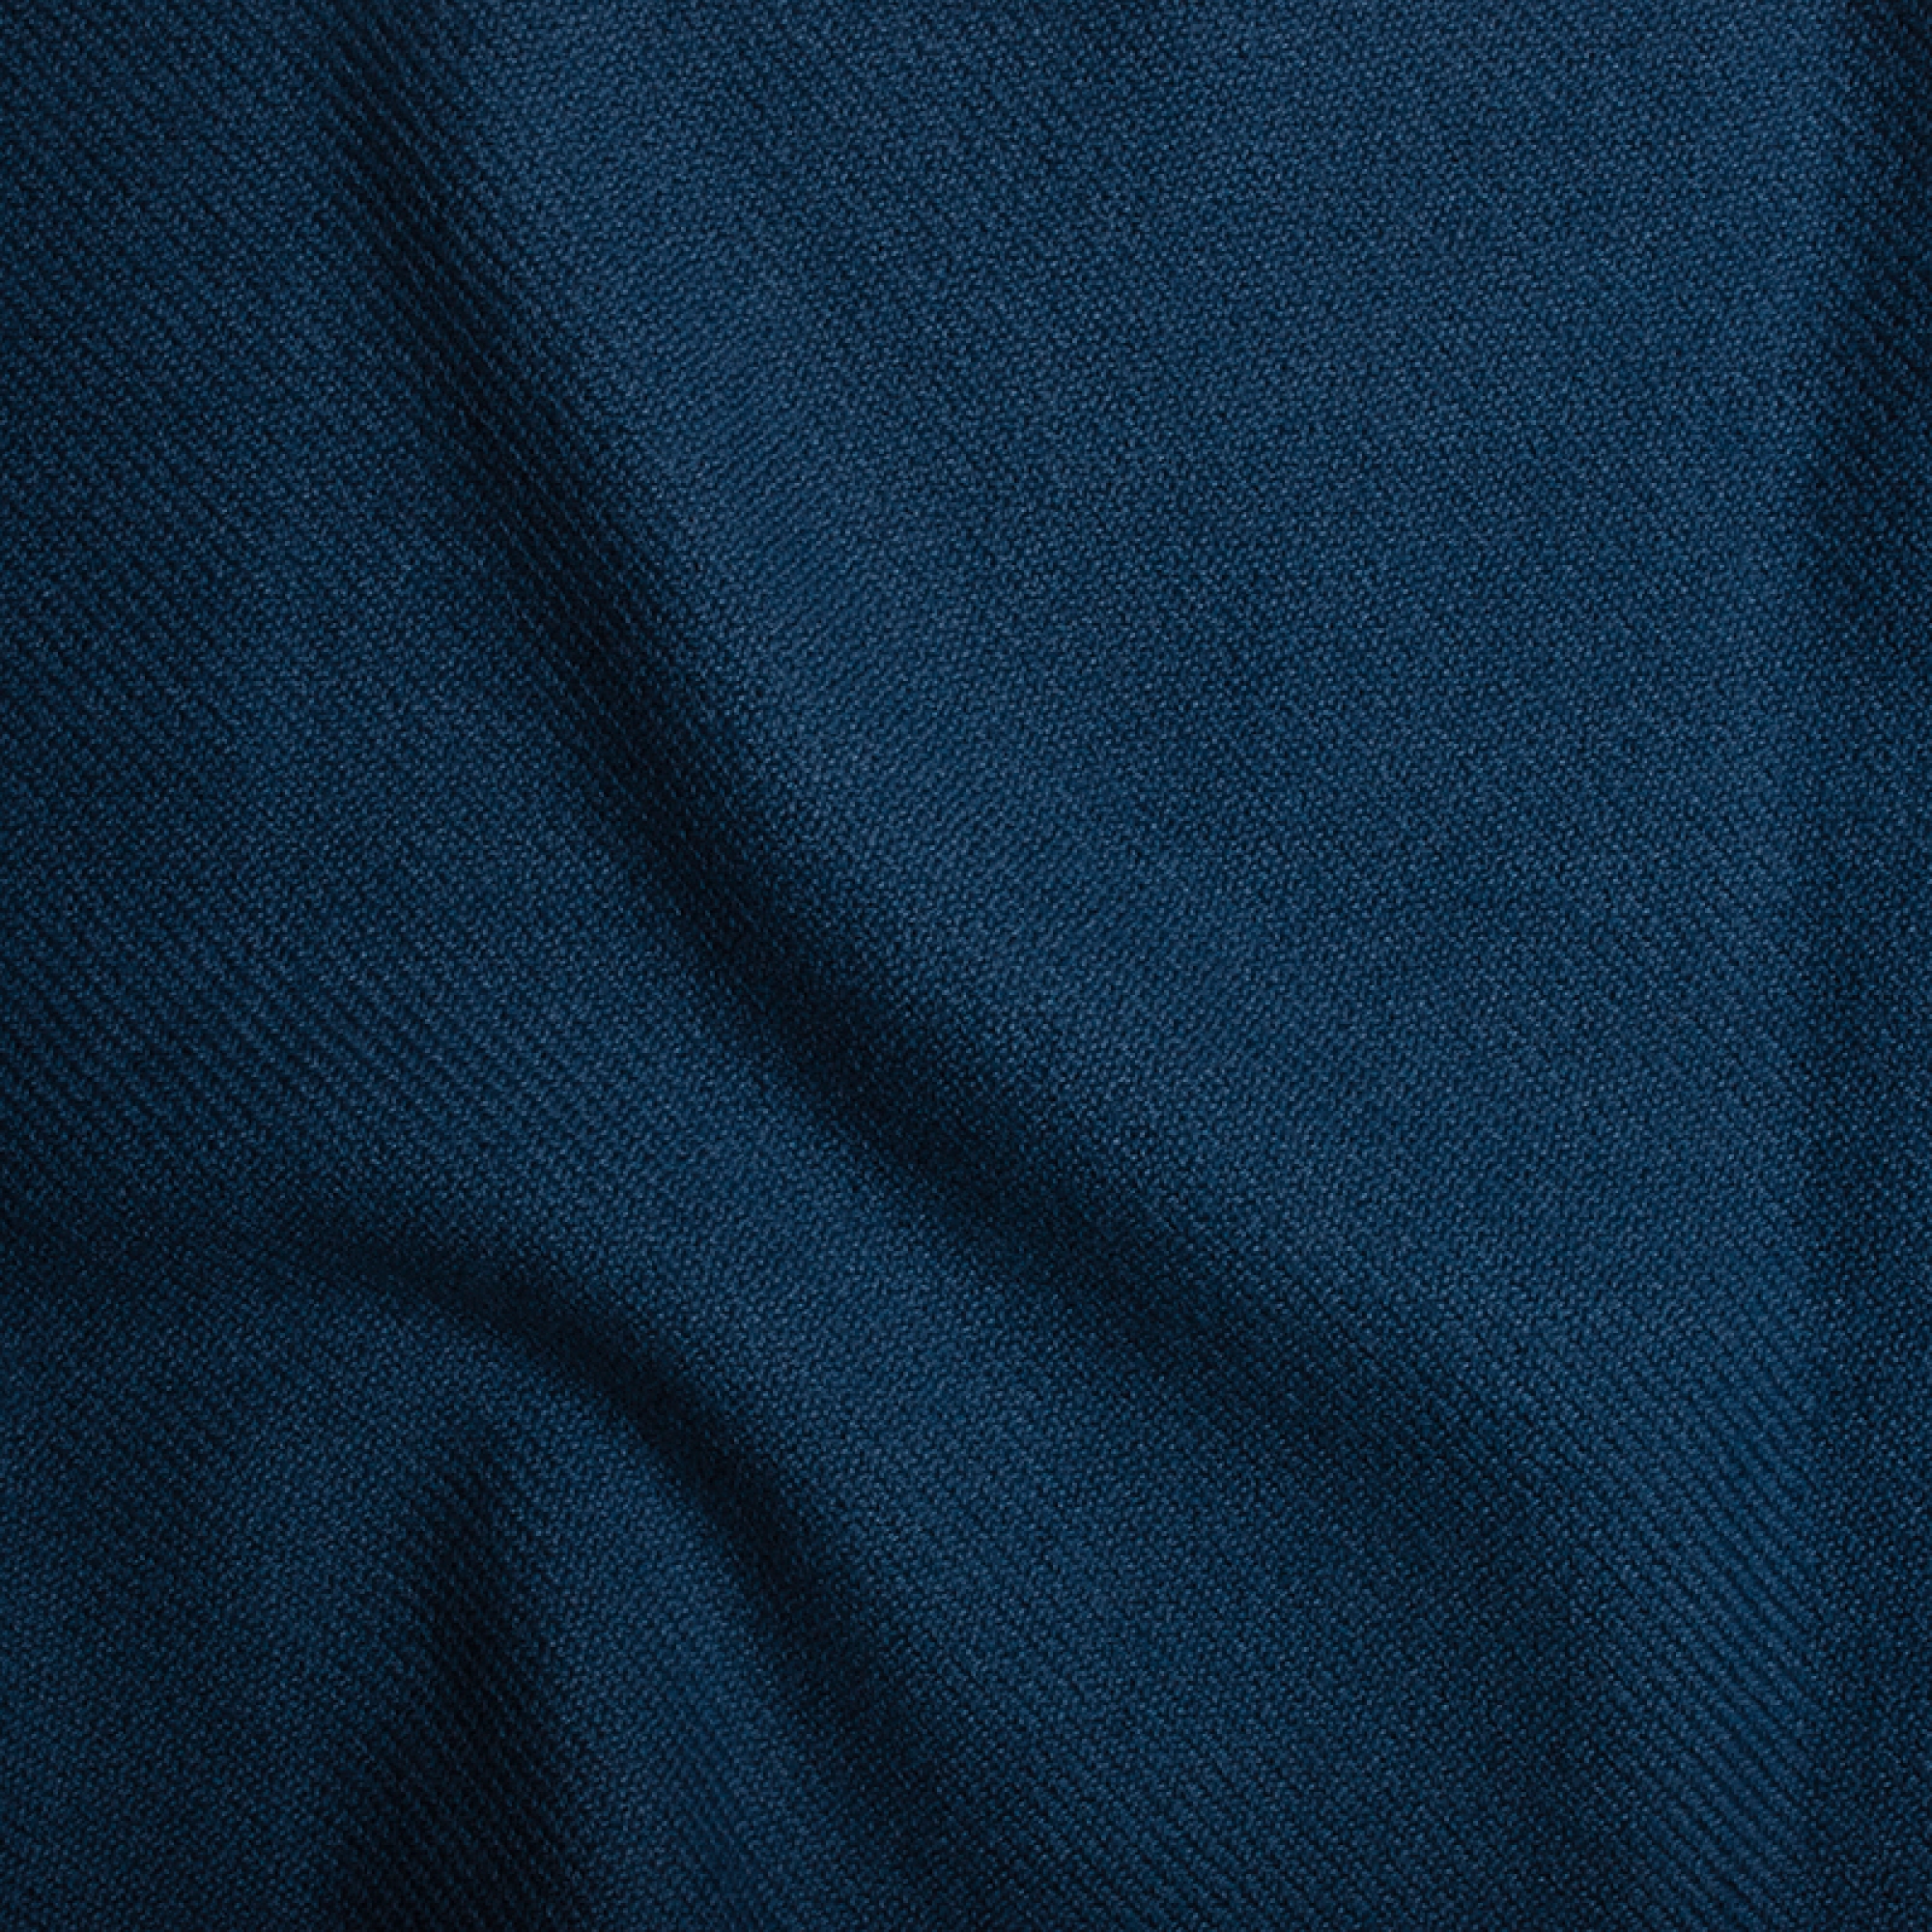 Cachemire pull homme toodoo plain s 140 x 200 bleu prusse 140 x 200 cm